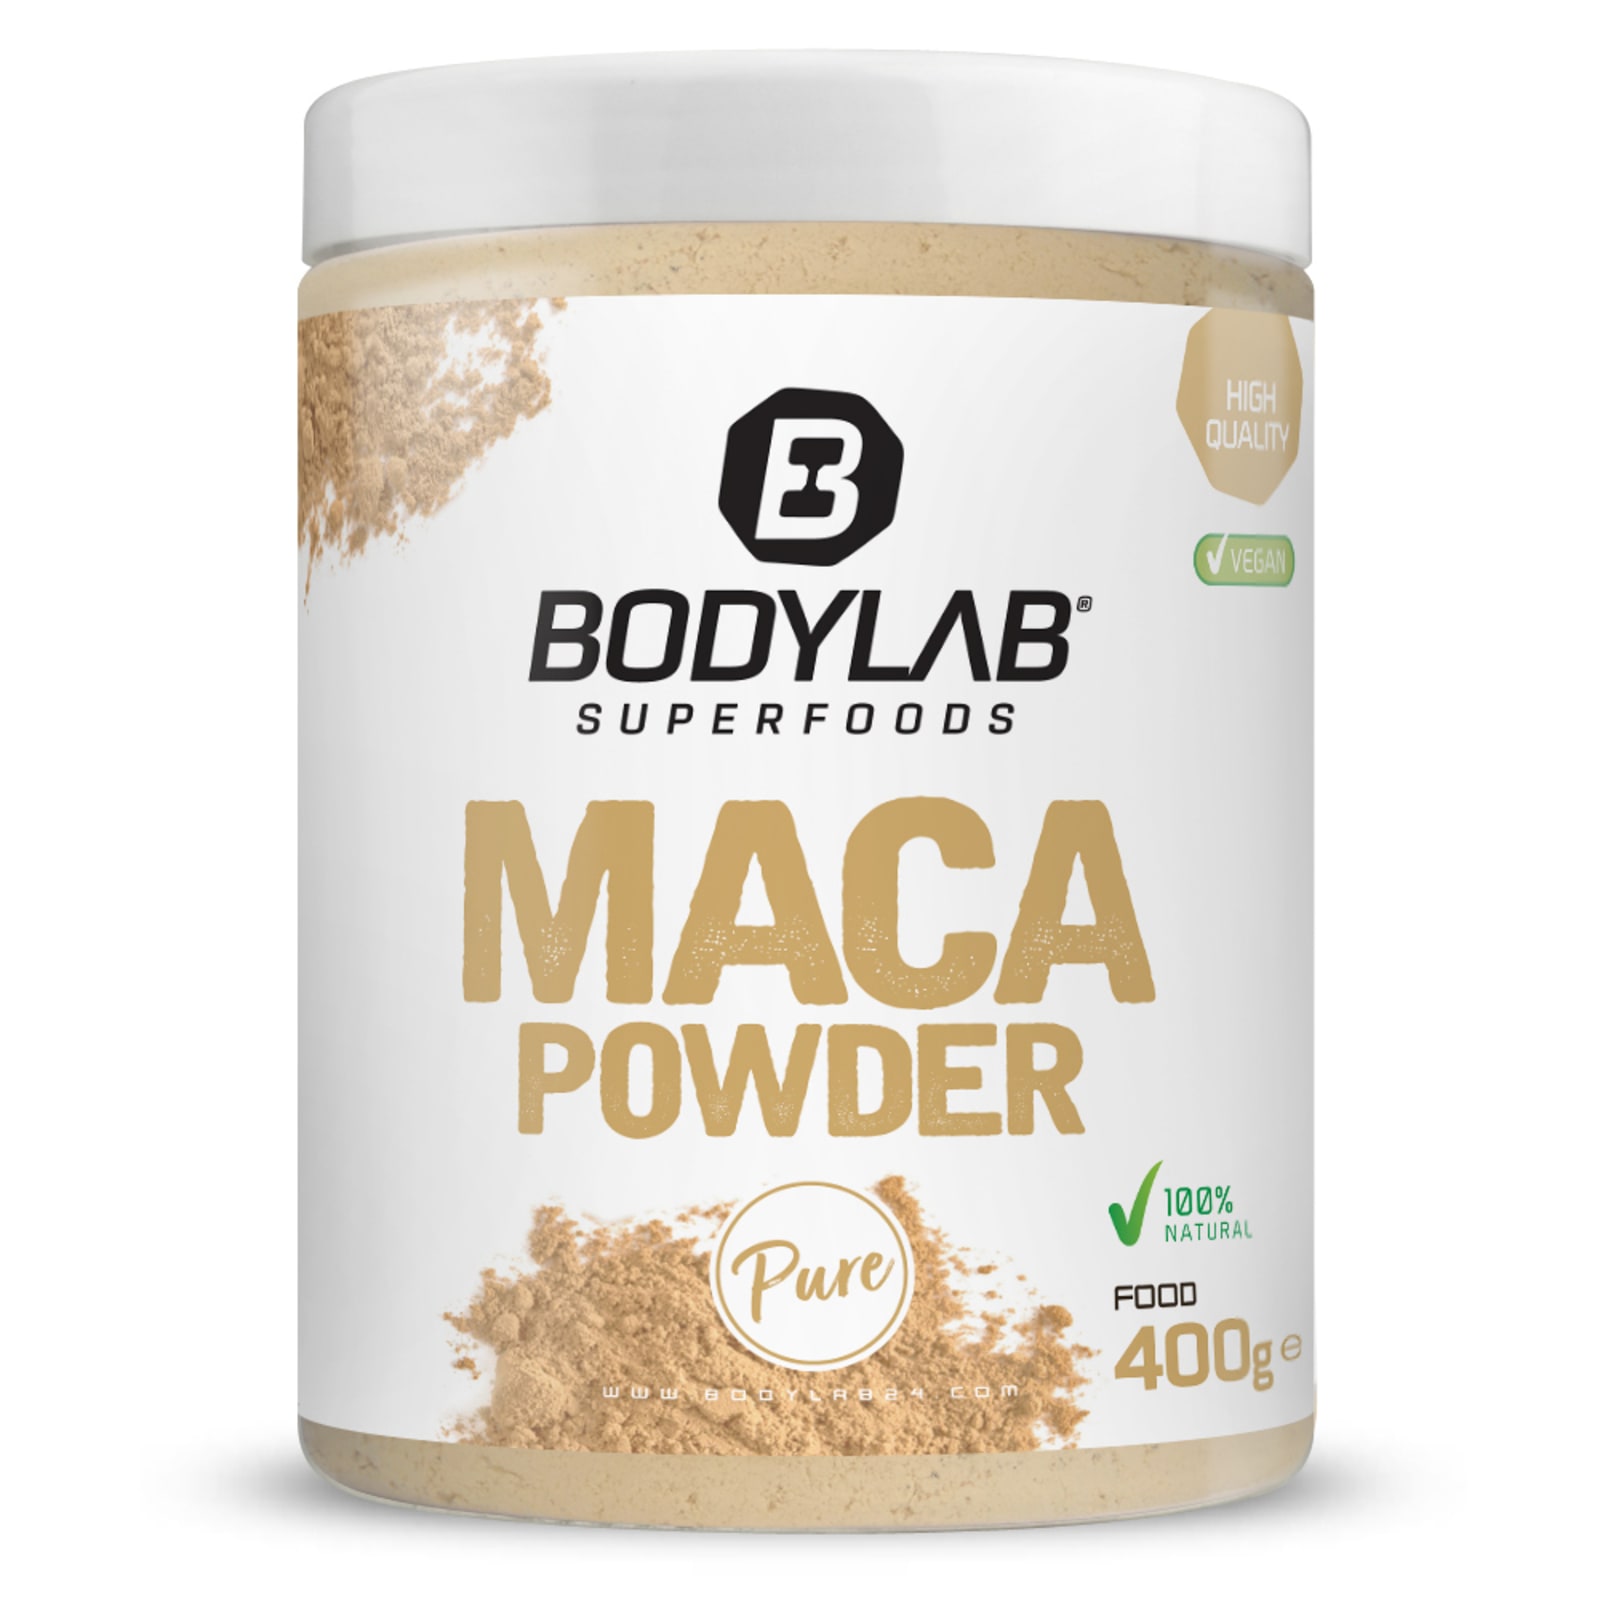 Maca Powder (400g) Bodylab24 kopen | Bodylab Shop